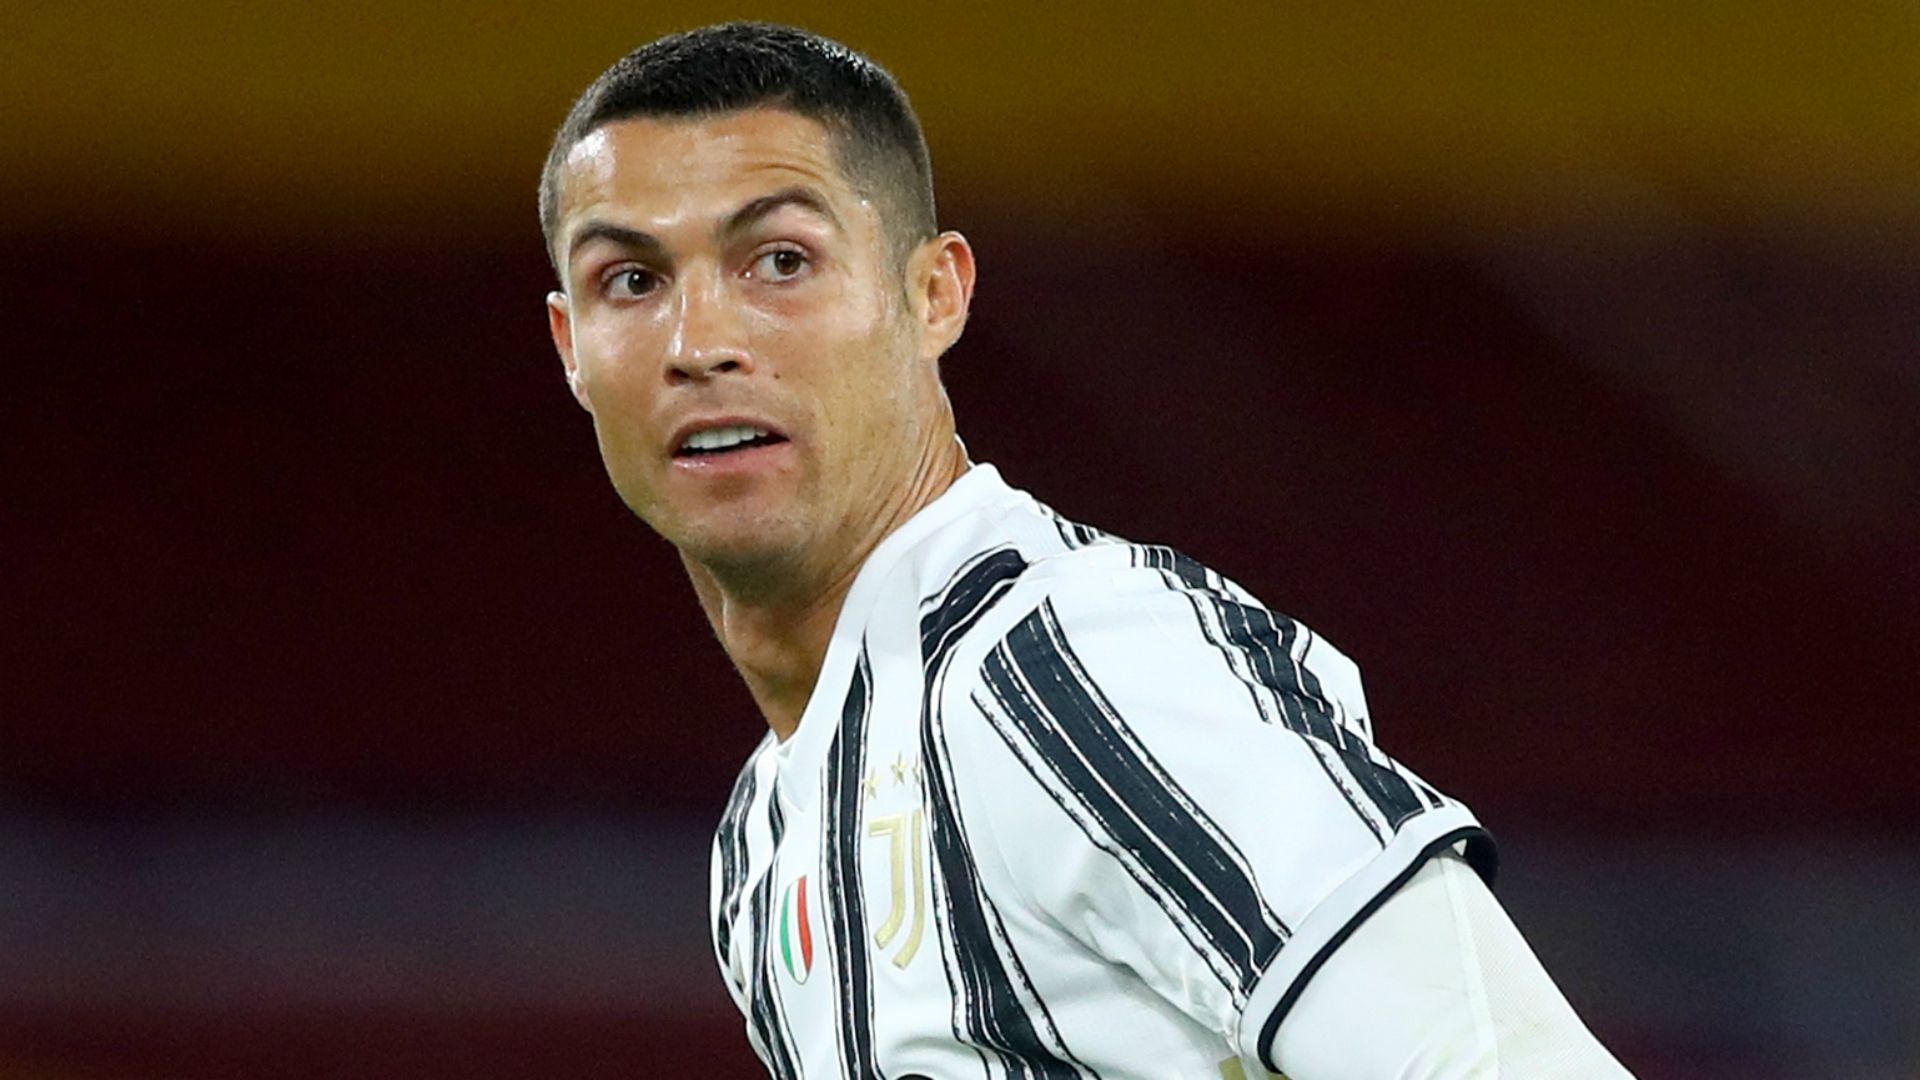 Juve out of isolation: updates on Cristiano Ronaldo